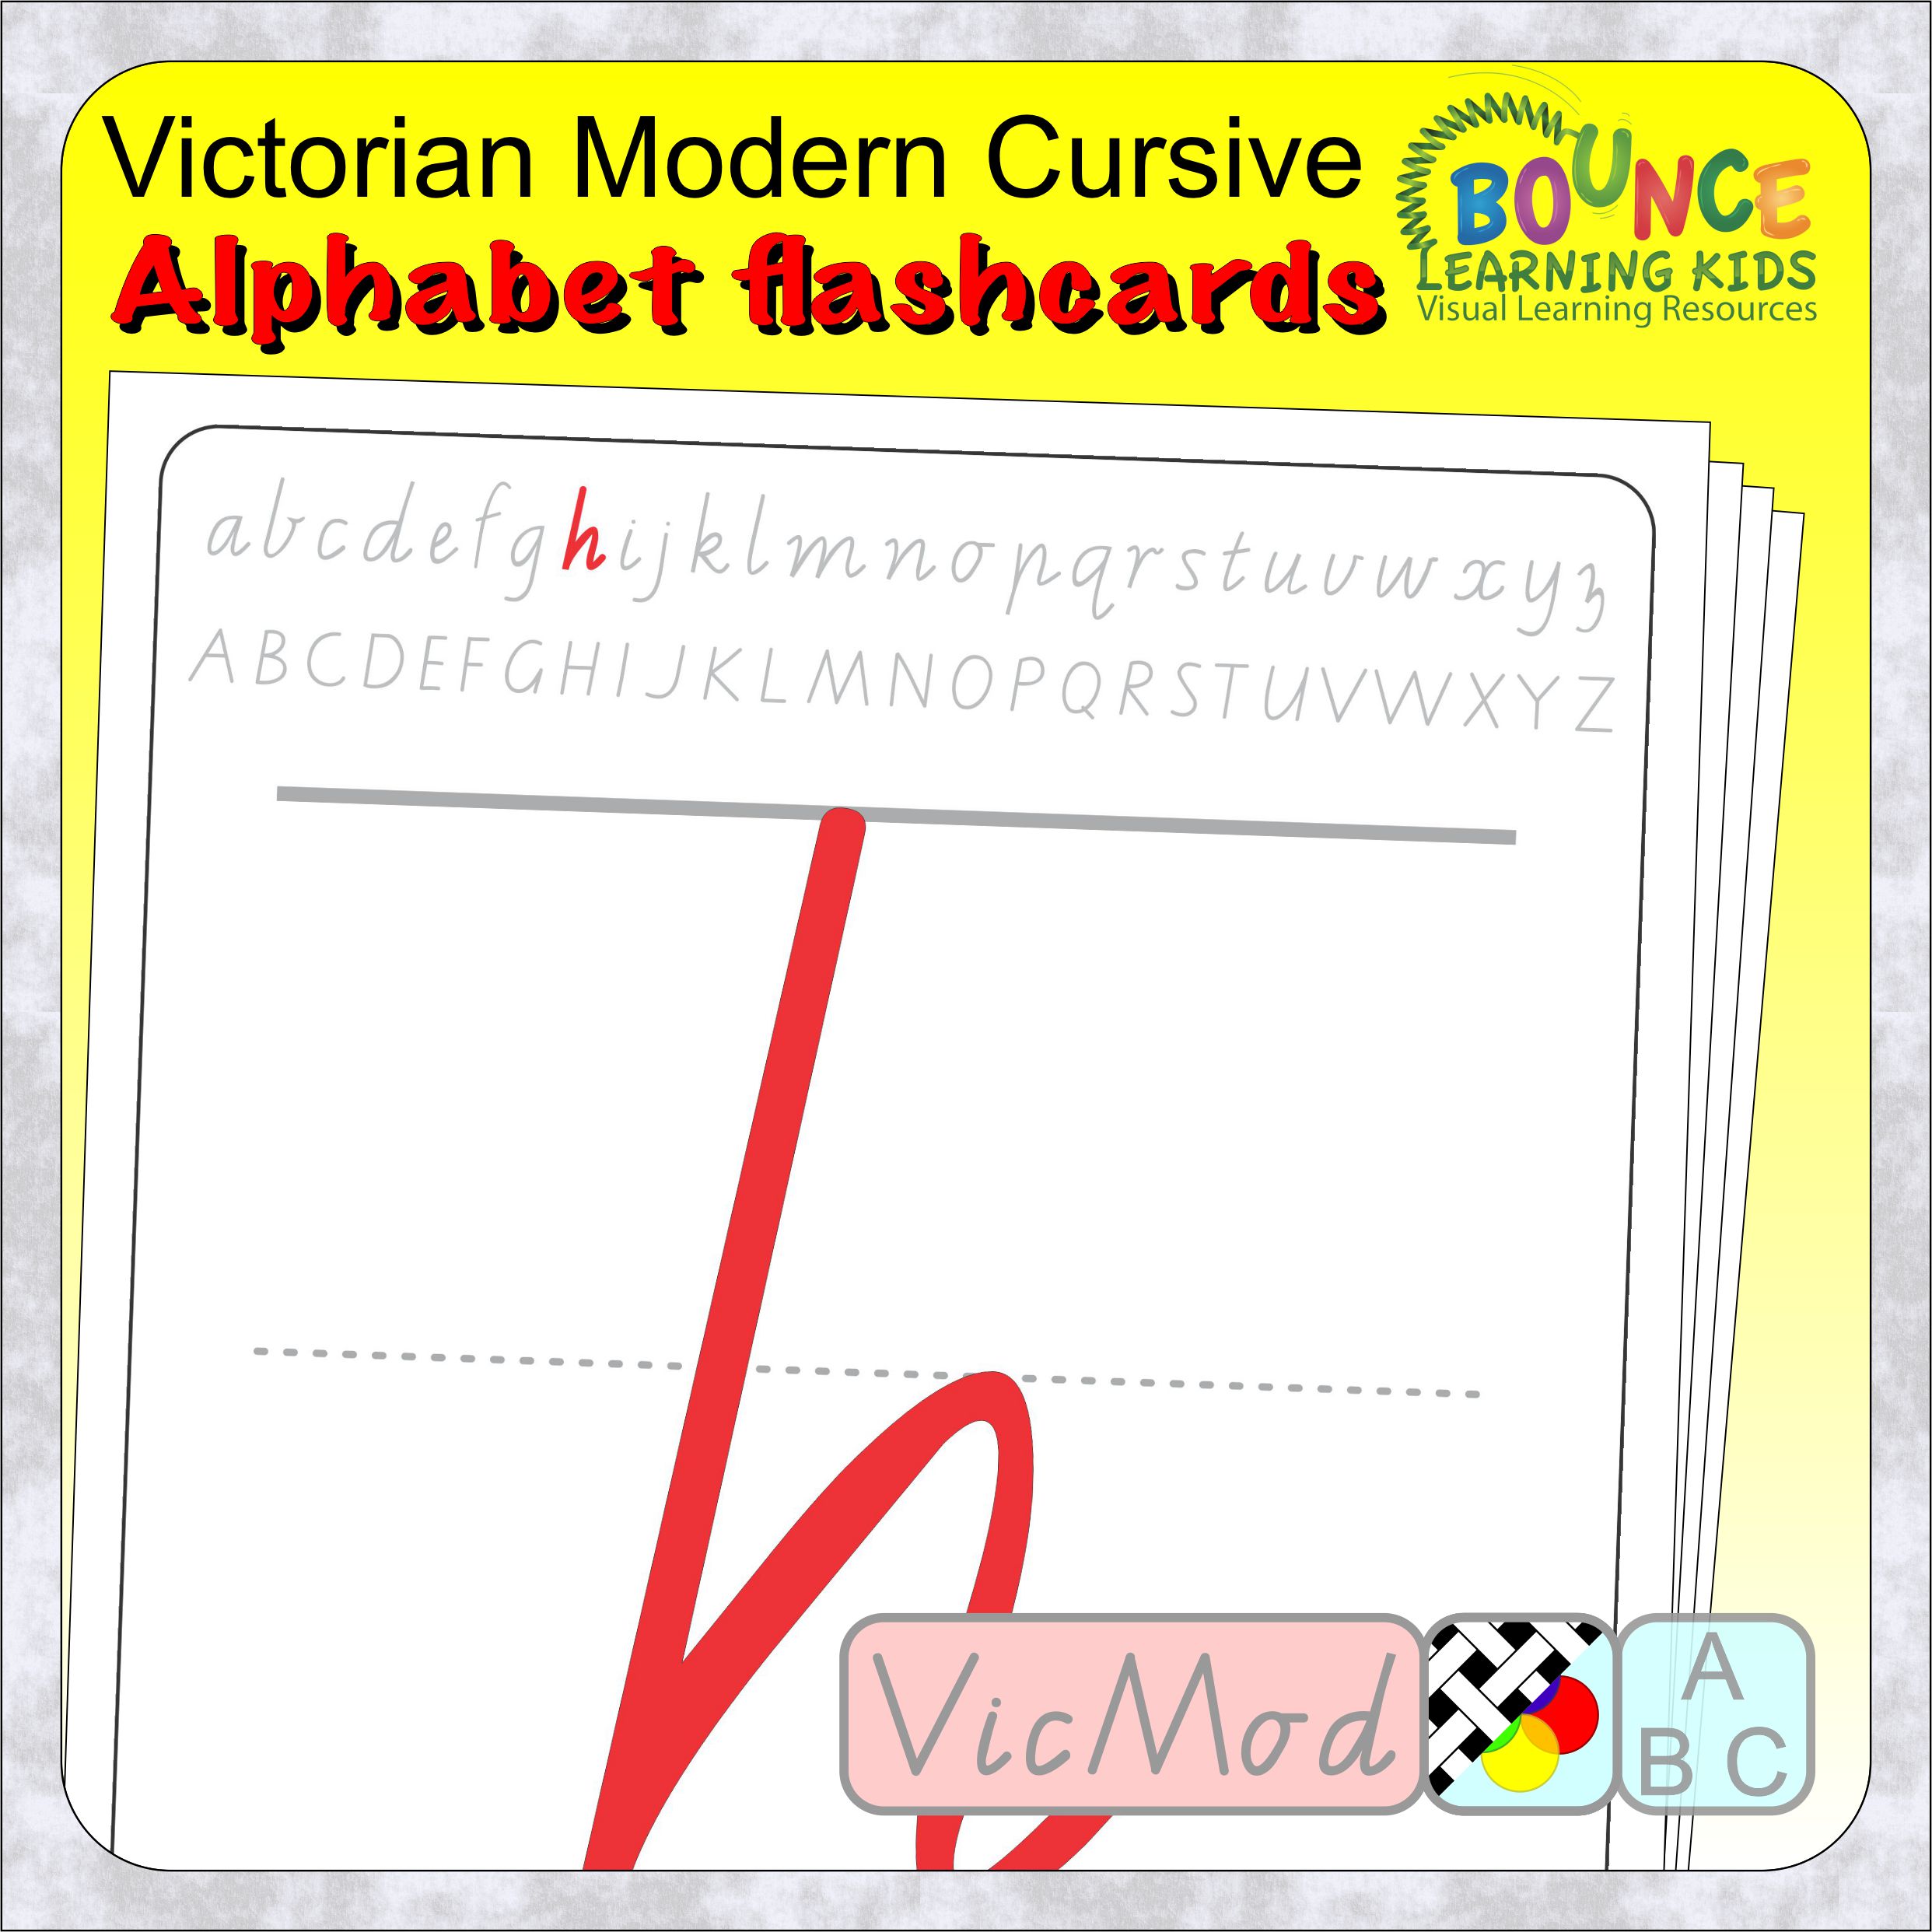 26 Fun Victoria Modern Cursive Alphabet Flashcards